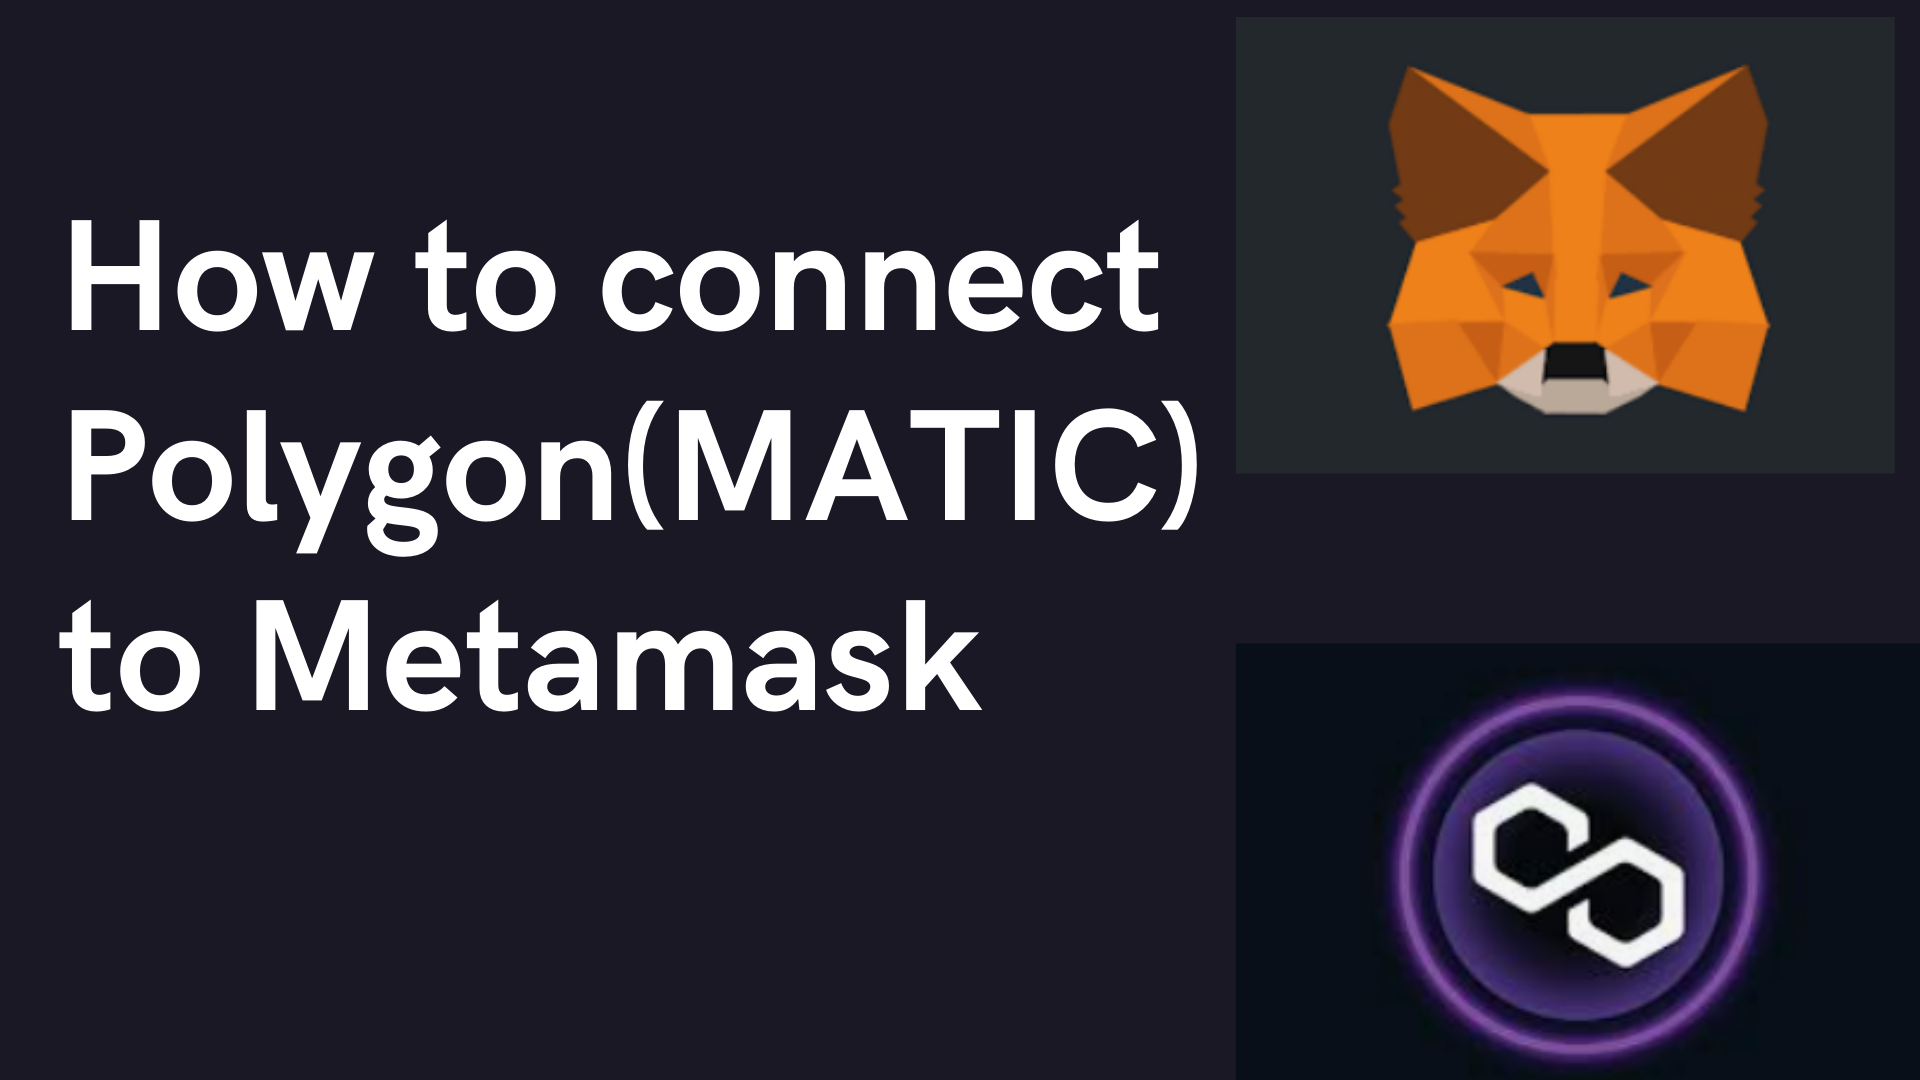 Matic blockchain metamask crypto step